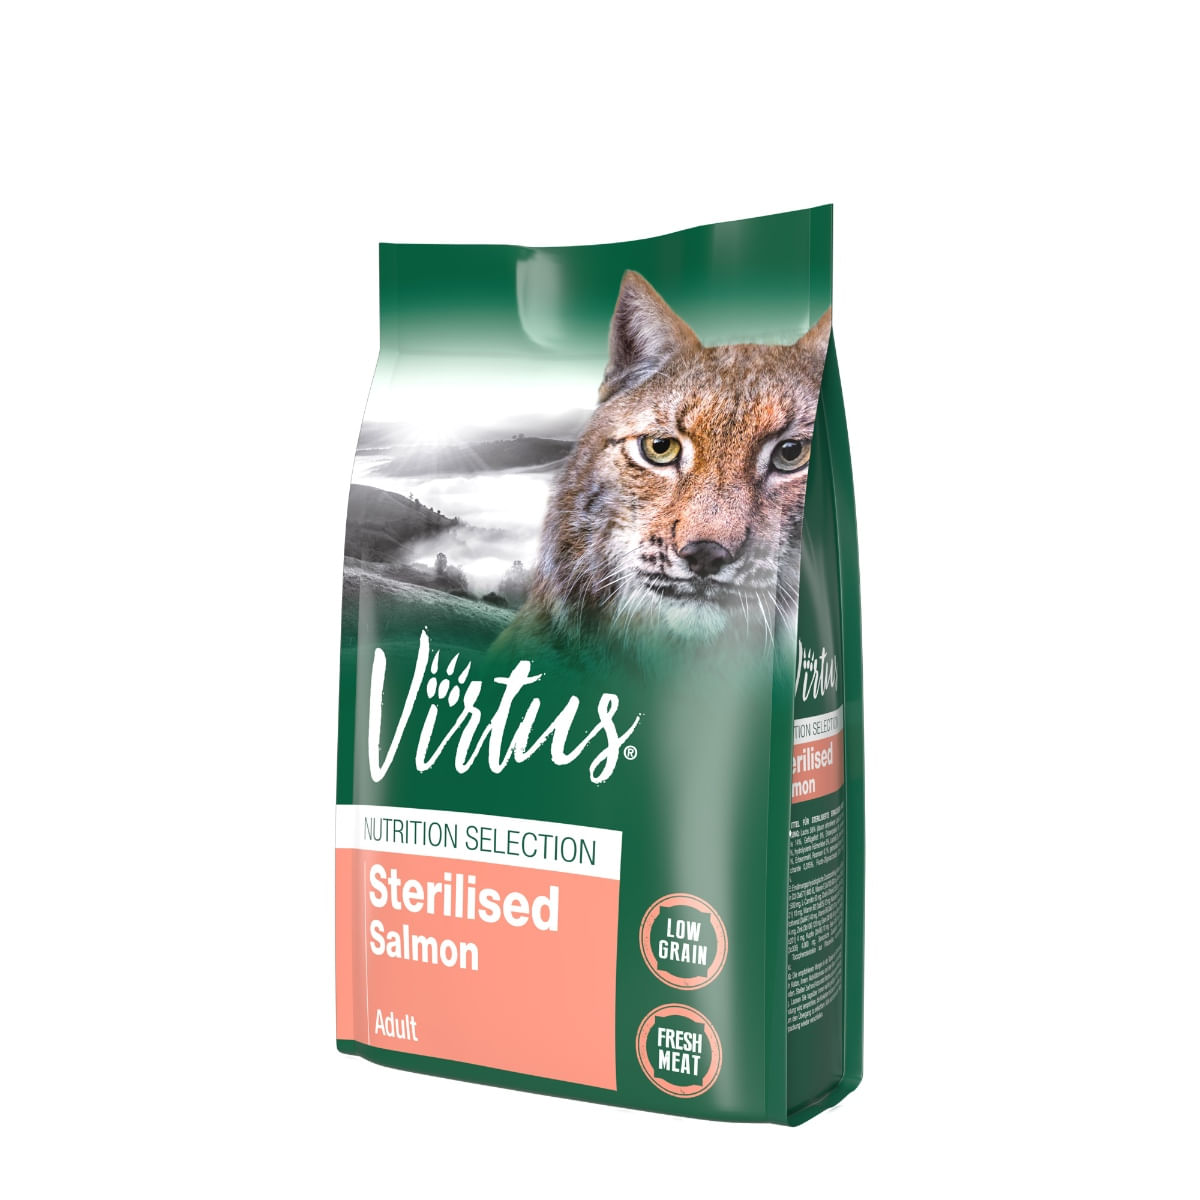 Virtus Cat Nutrition Selection Sterilised Salmone